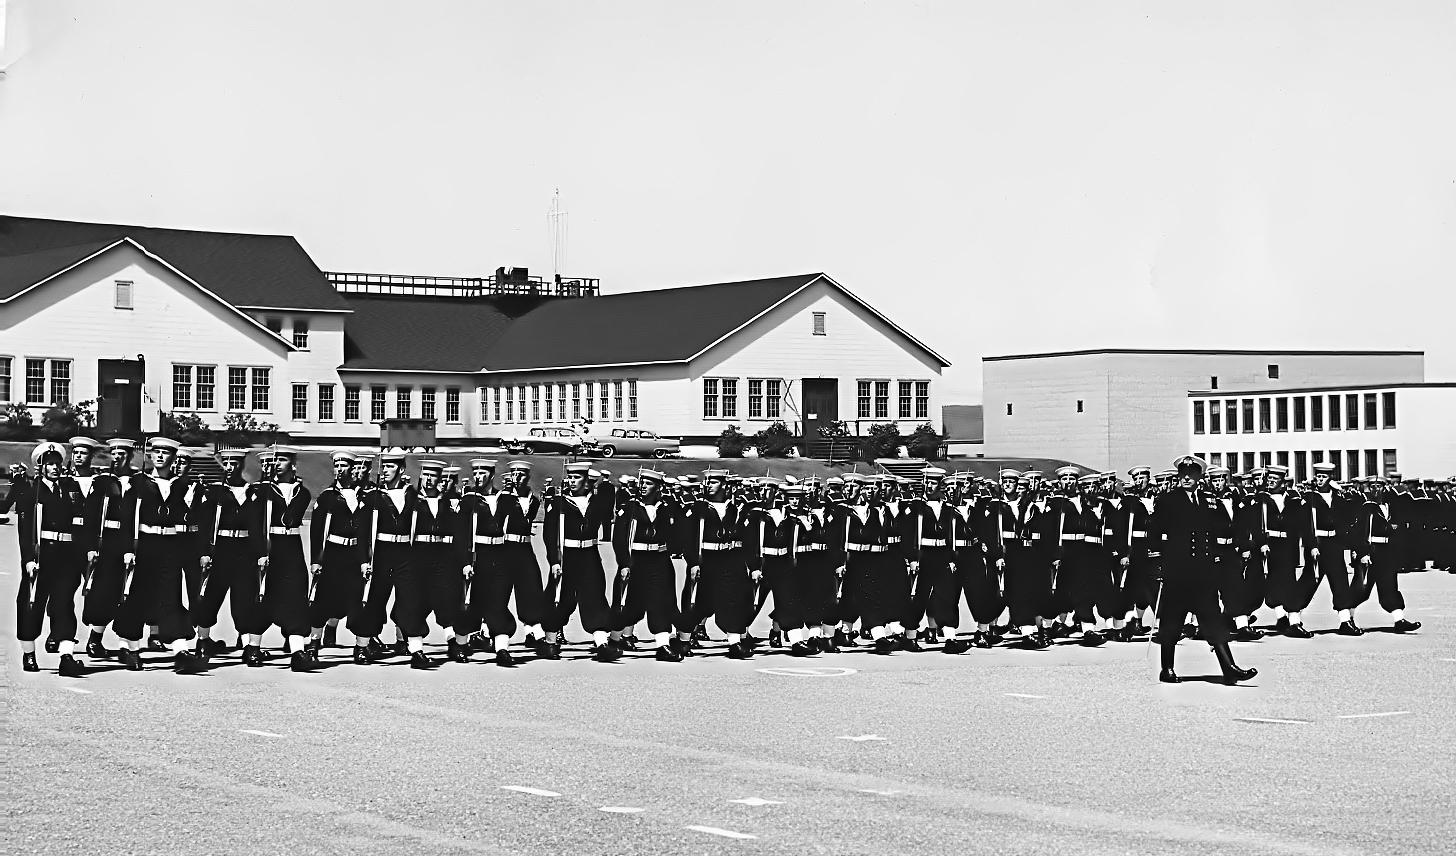 Margaree Division at HMCS Cornwallis, passing-out parade, probably July, 1960.